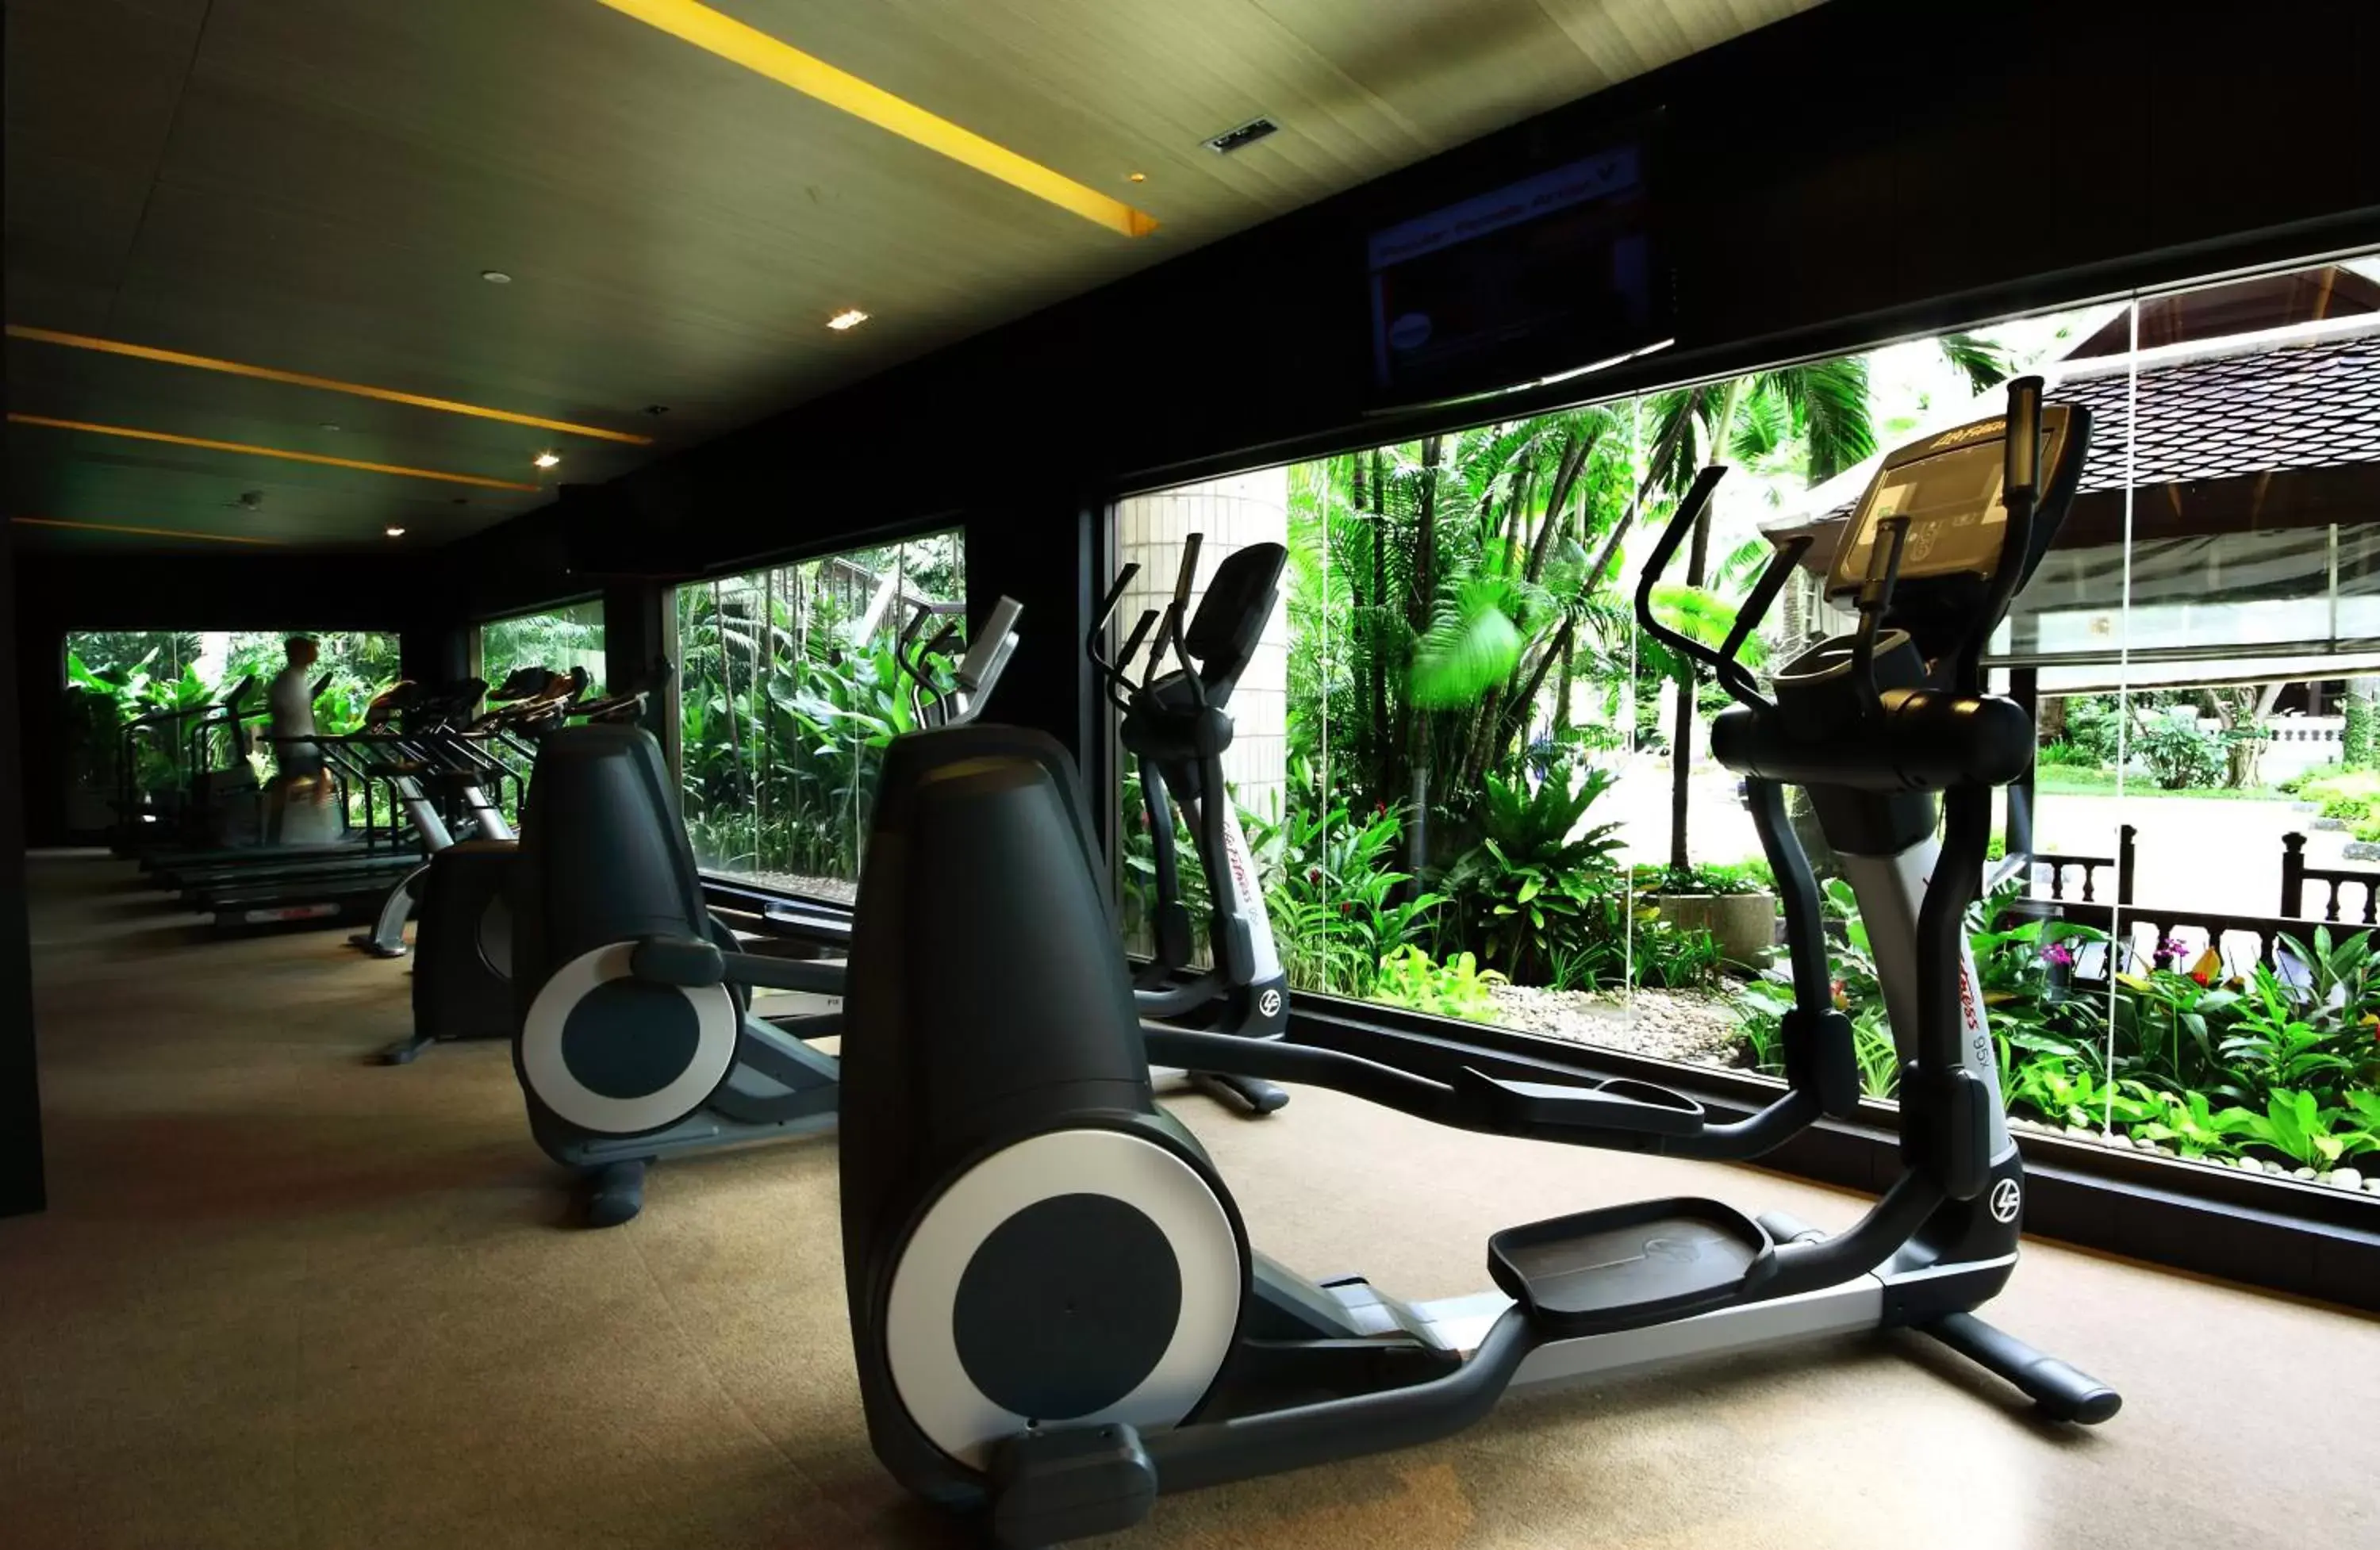 Fitness centre/facilities, Fitness Center/Facilities in Centara Grand at Central Plaza Ladprao Bangkok